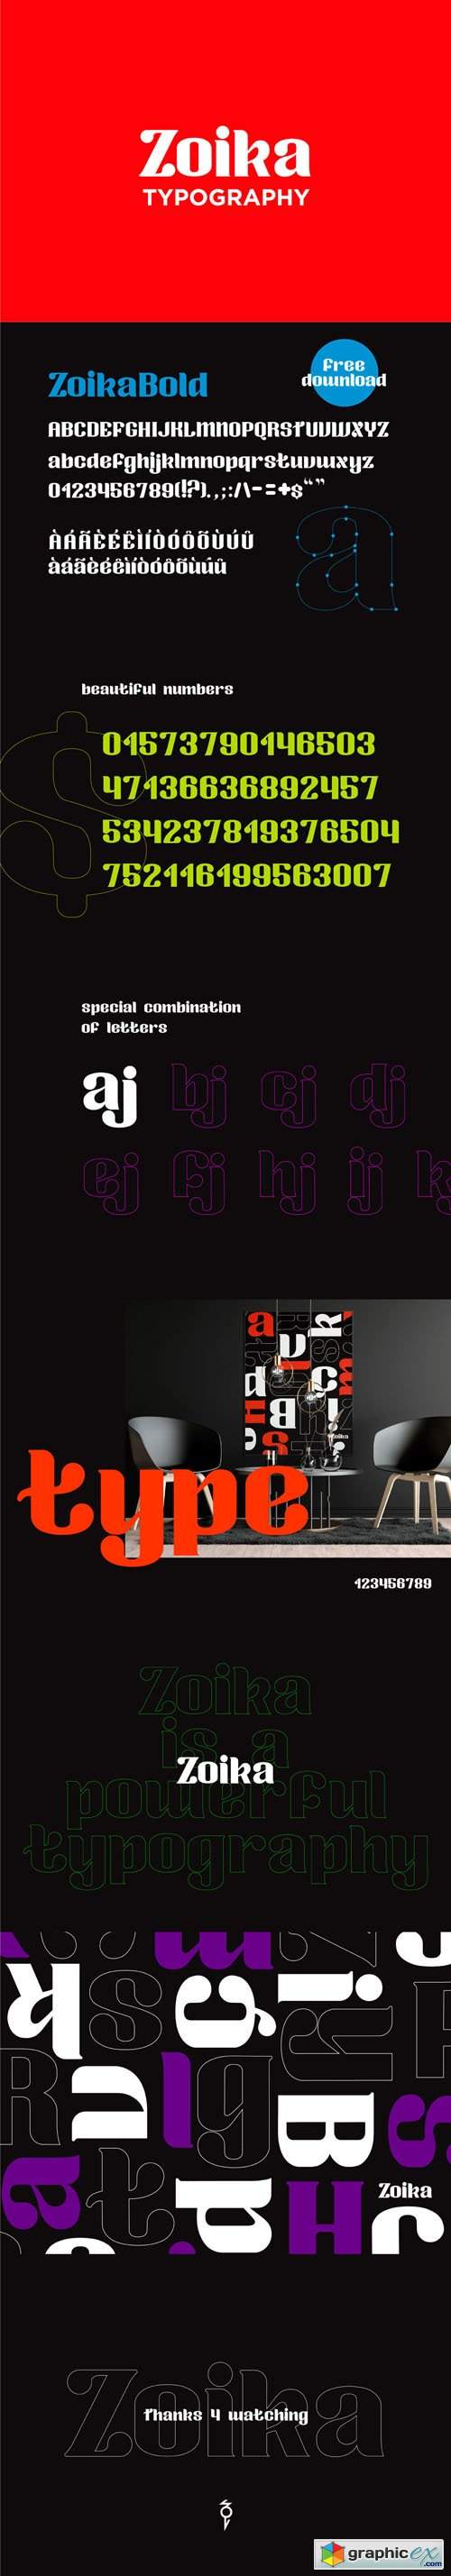 Zoika Typography - Modern Curvy Serif Typeface